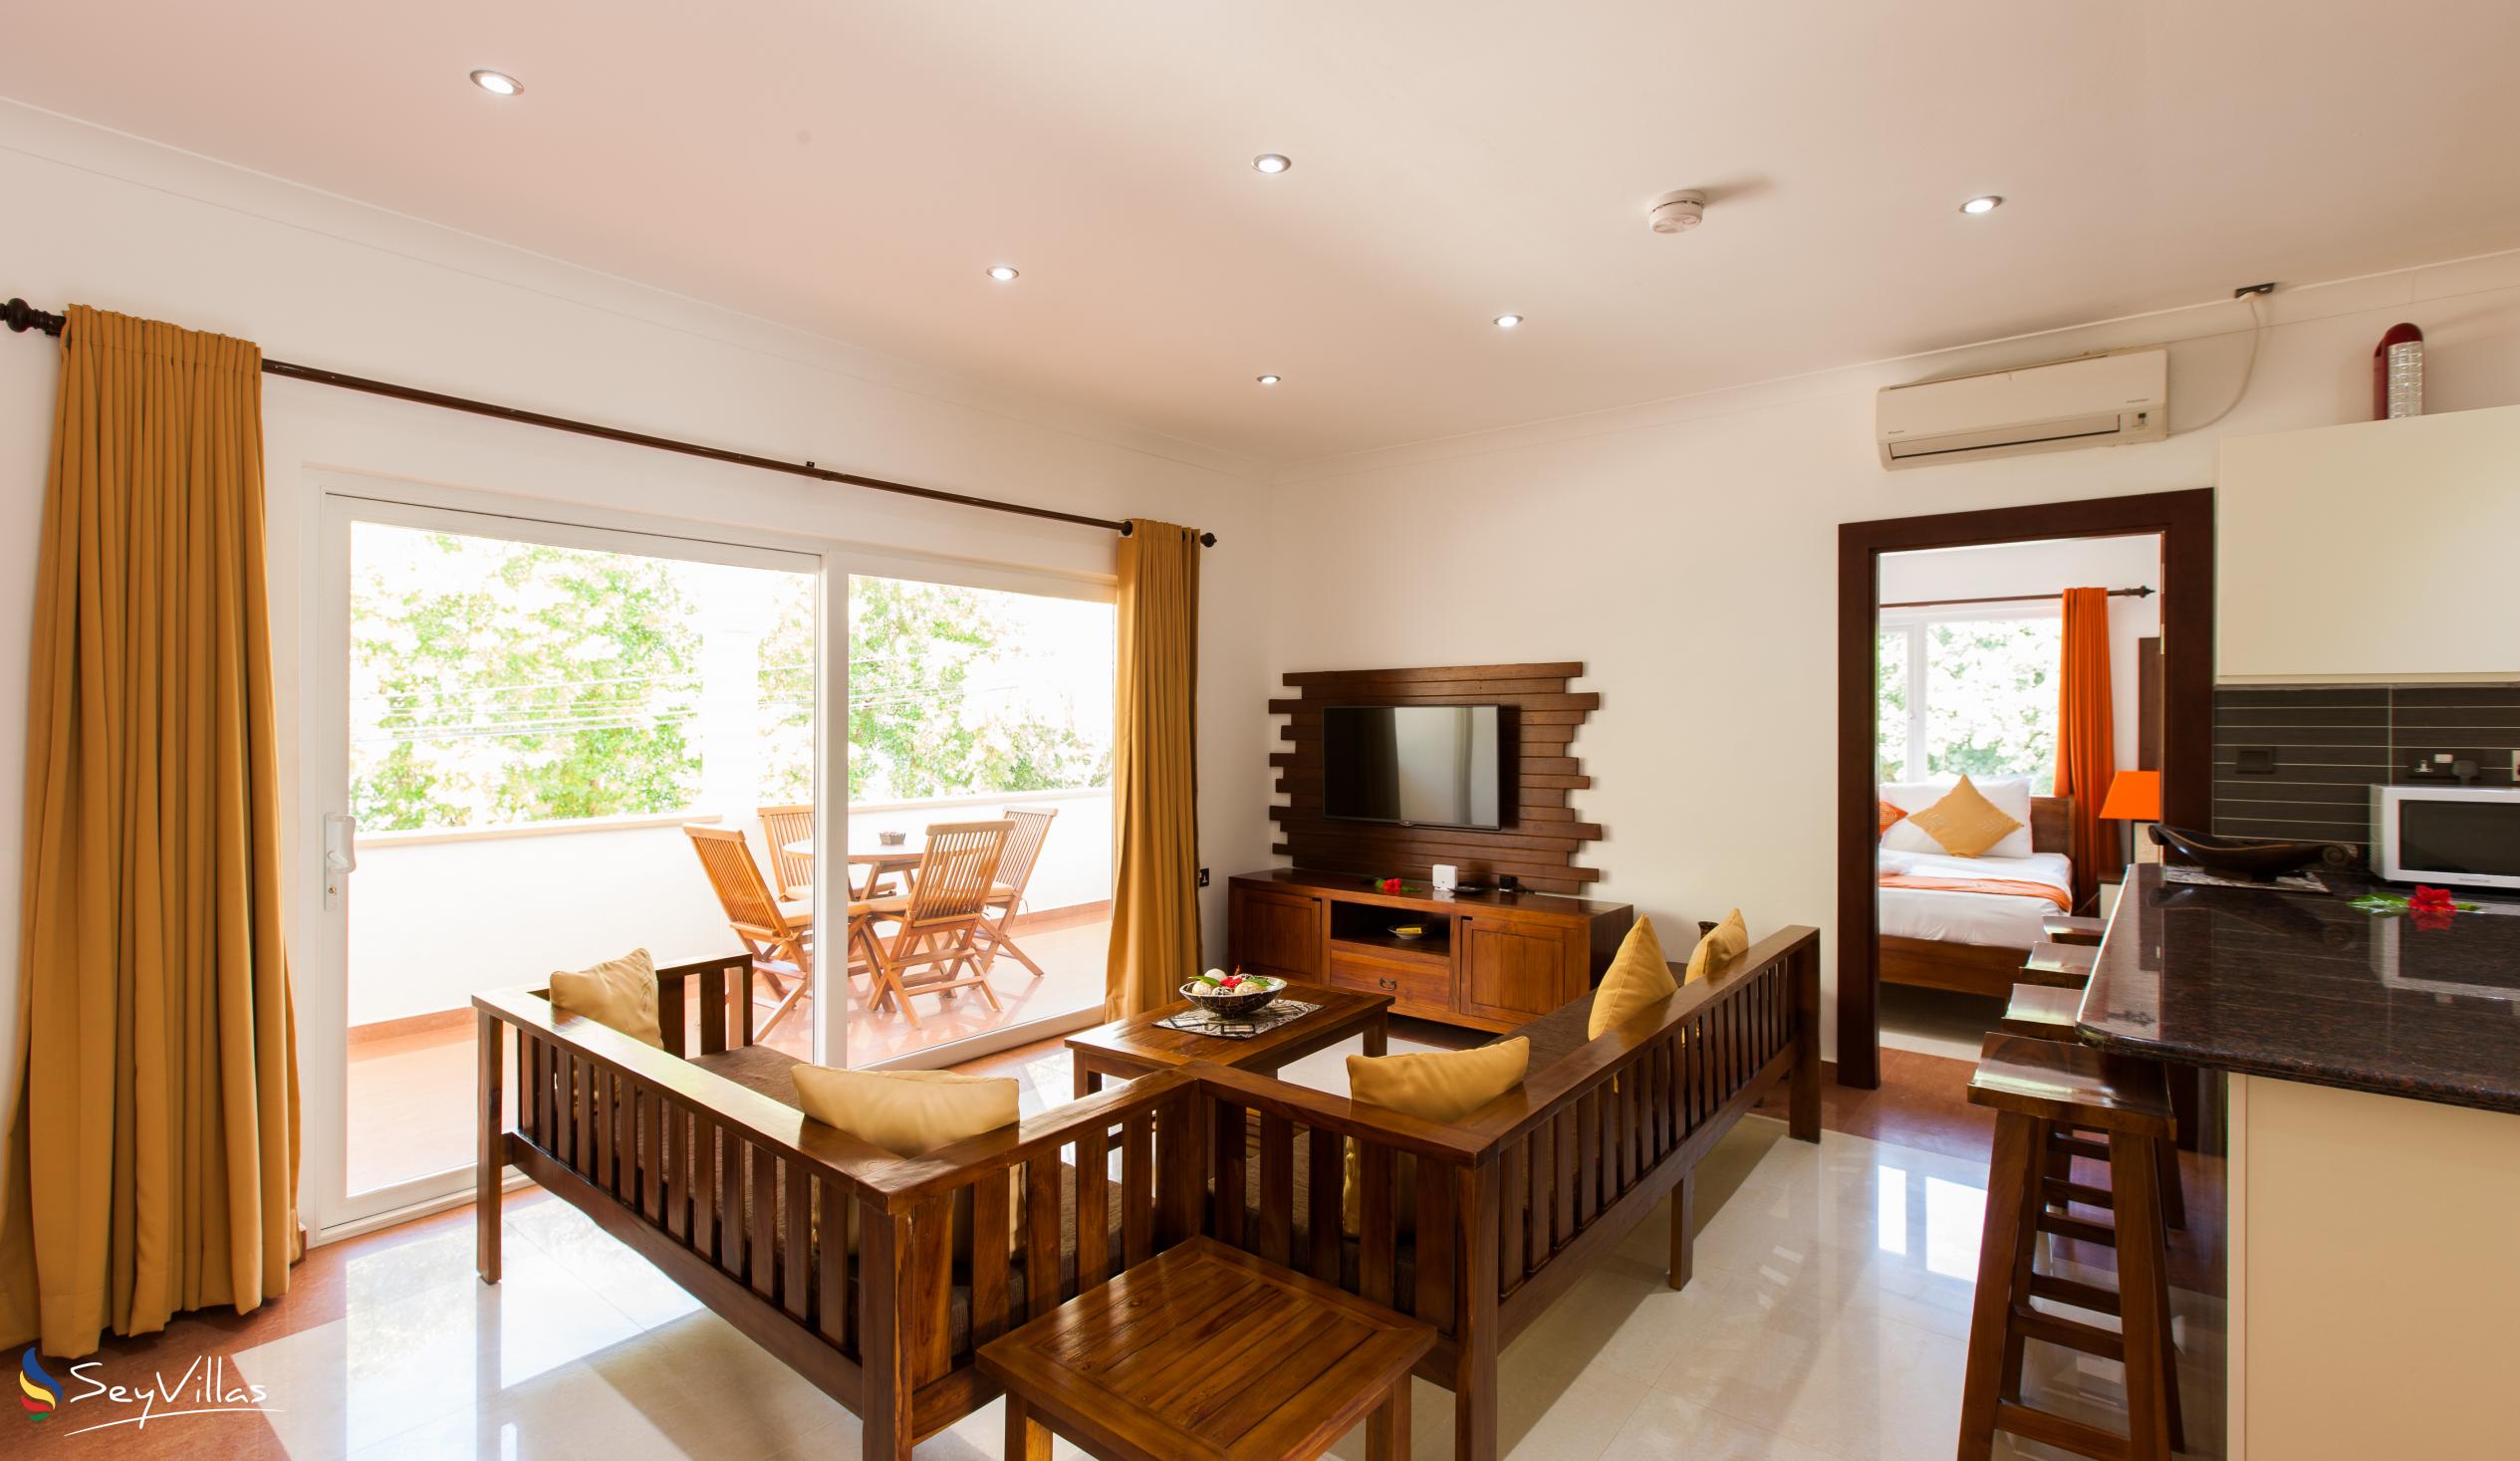 Foto 12: YASAD Luxury Beach Residence - Appartamento con 3 camere da letto - Praslin (Seychelles)